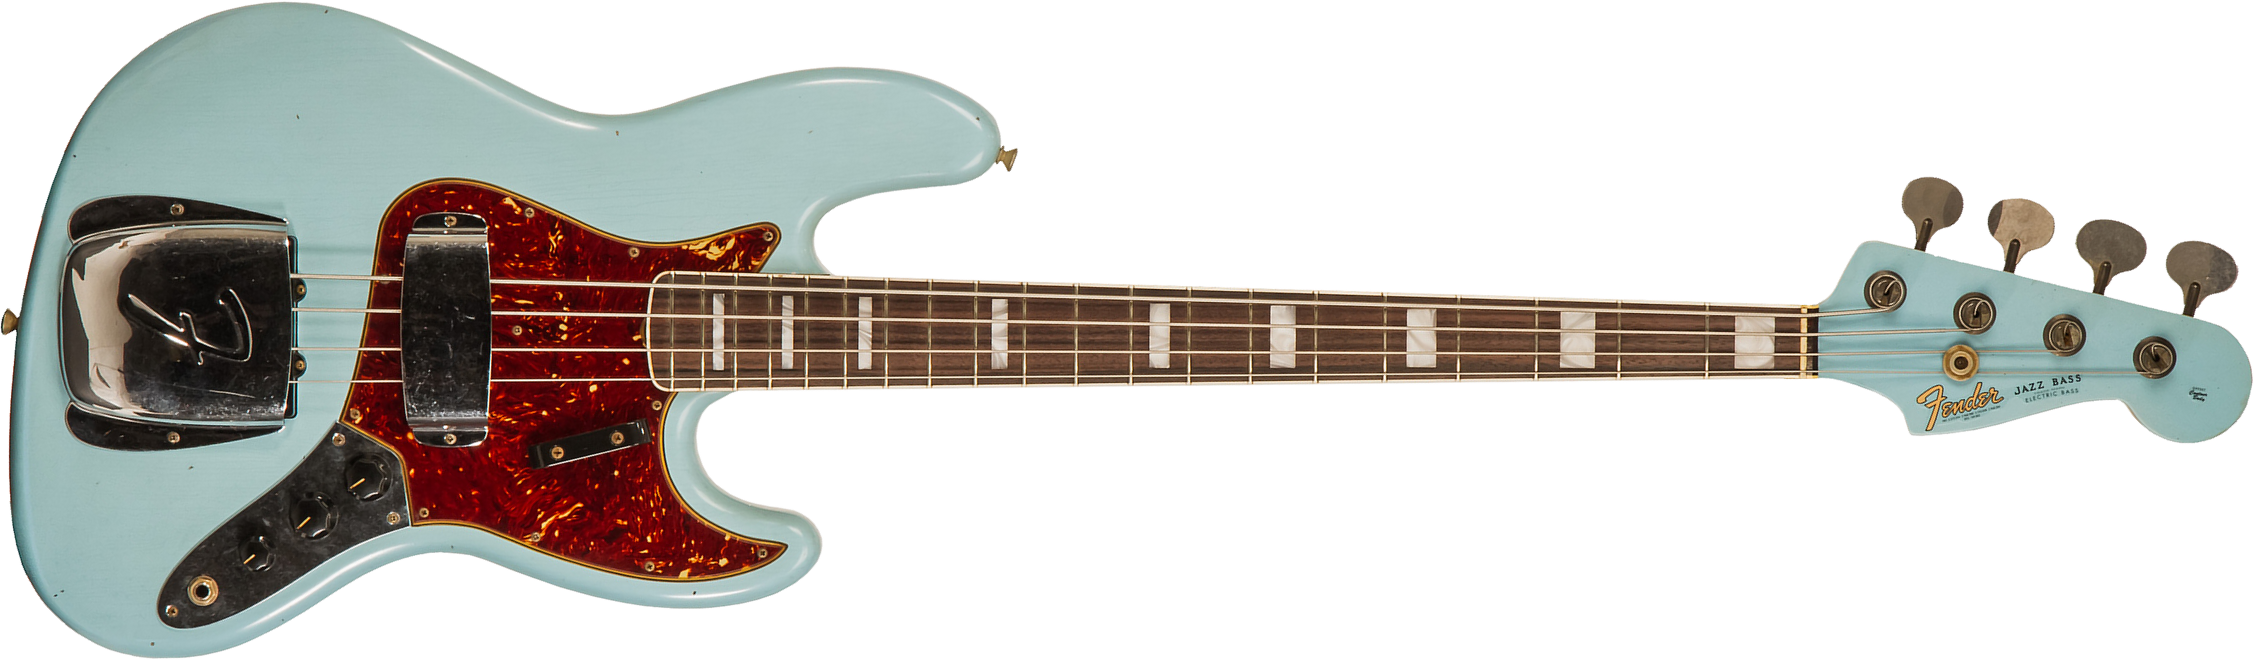 Fender Custom Shop Jazz Bass 1966 Rw #cz553892 - Journeyman Relic Daphne Blue - Bajo eléctrico de cuerpo sólido - Main picture